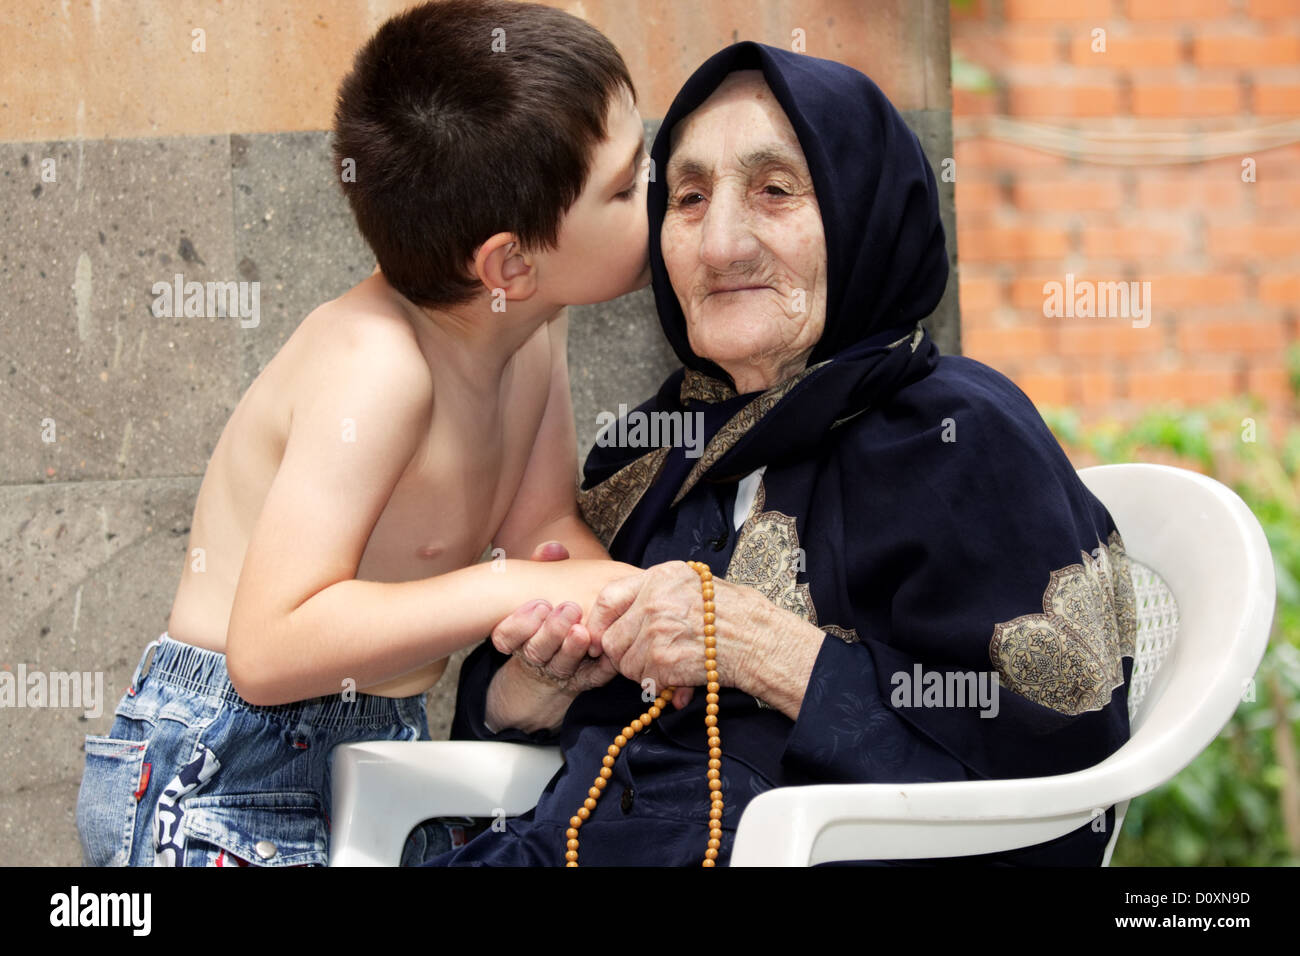 Secrets between kid and granny Stock Photo